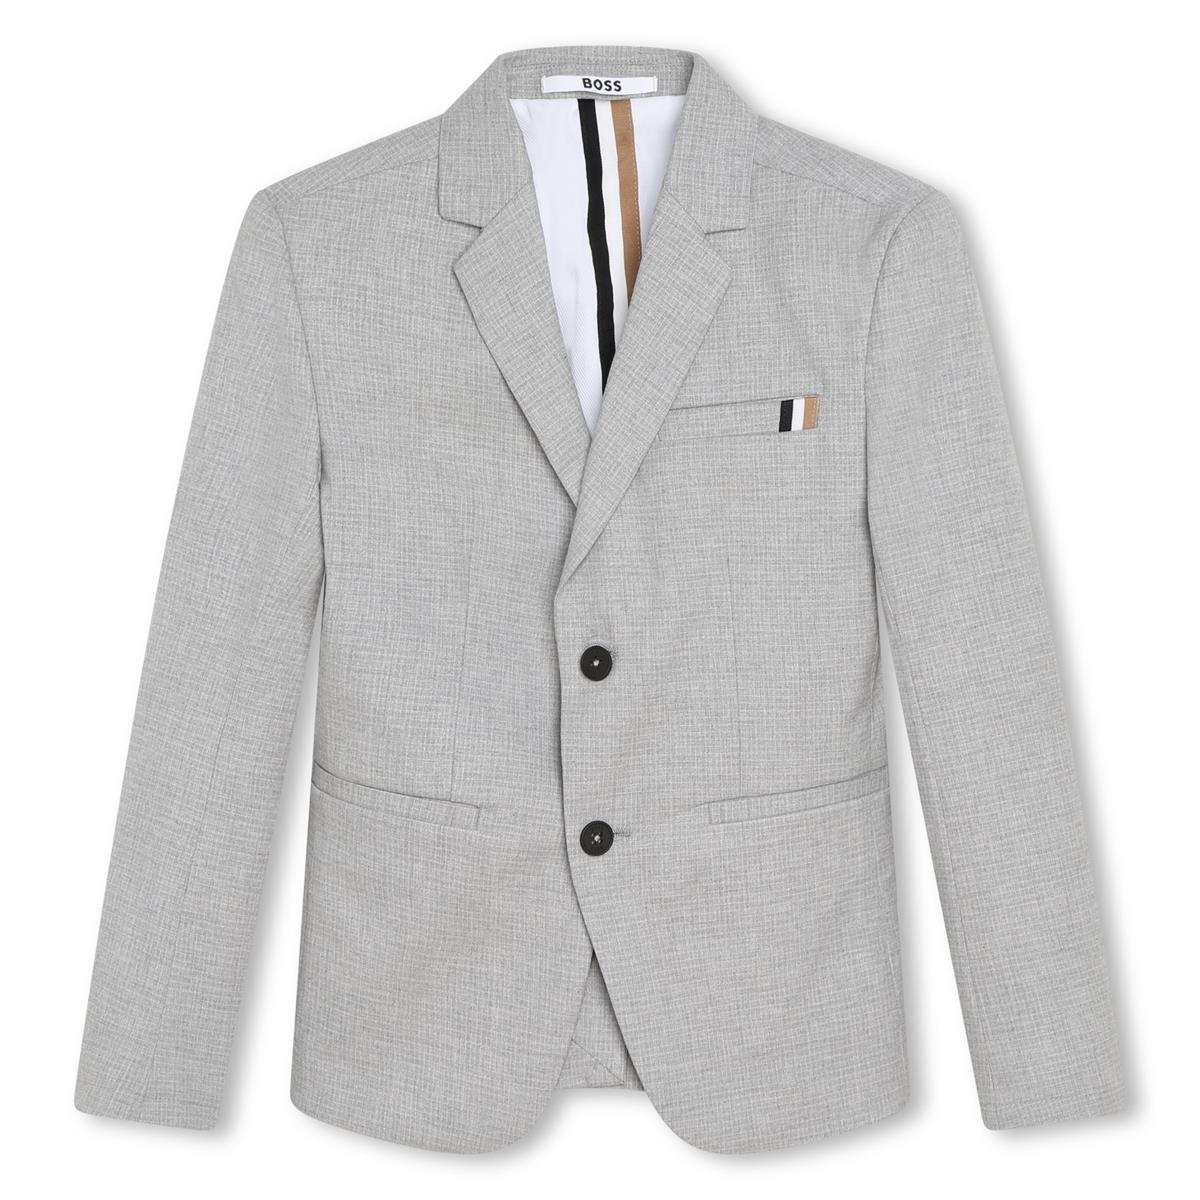 Boys Light Grey Suit